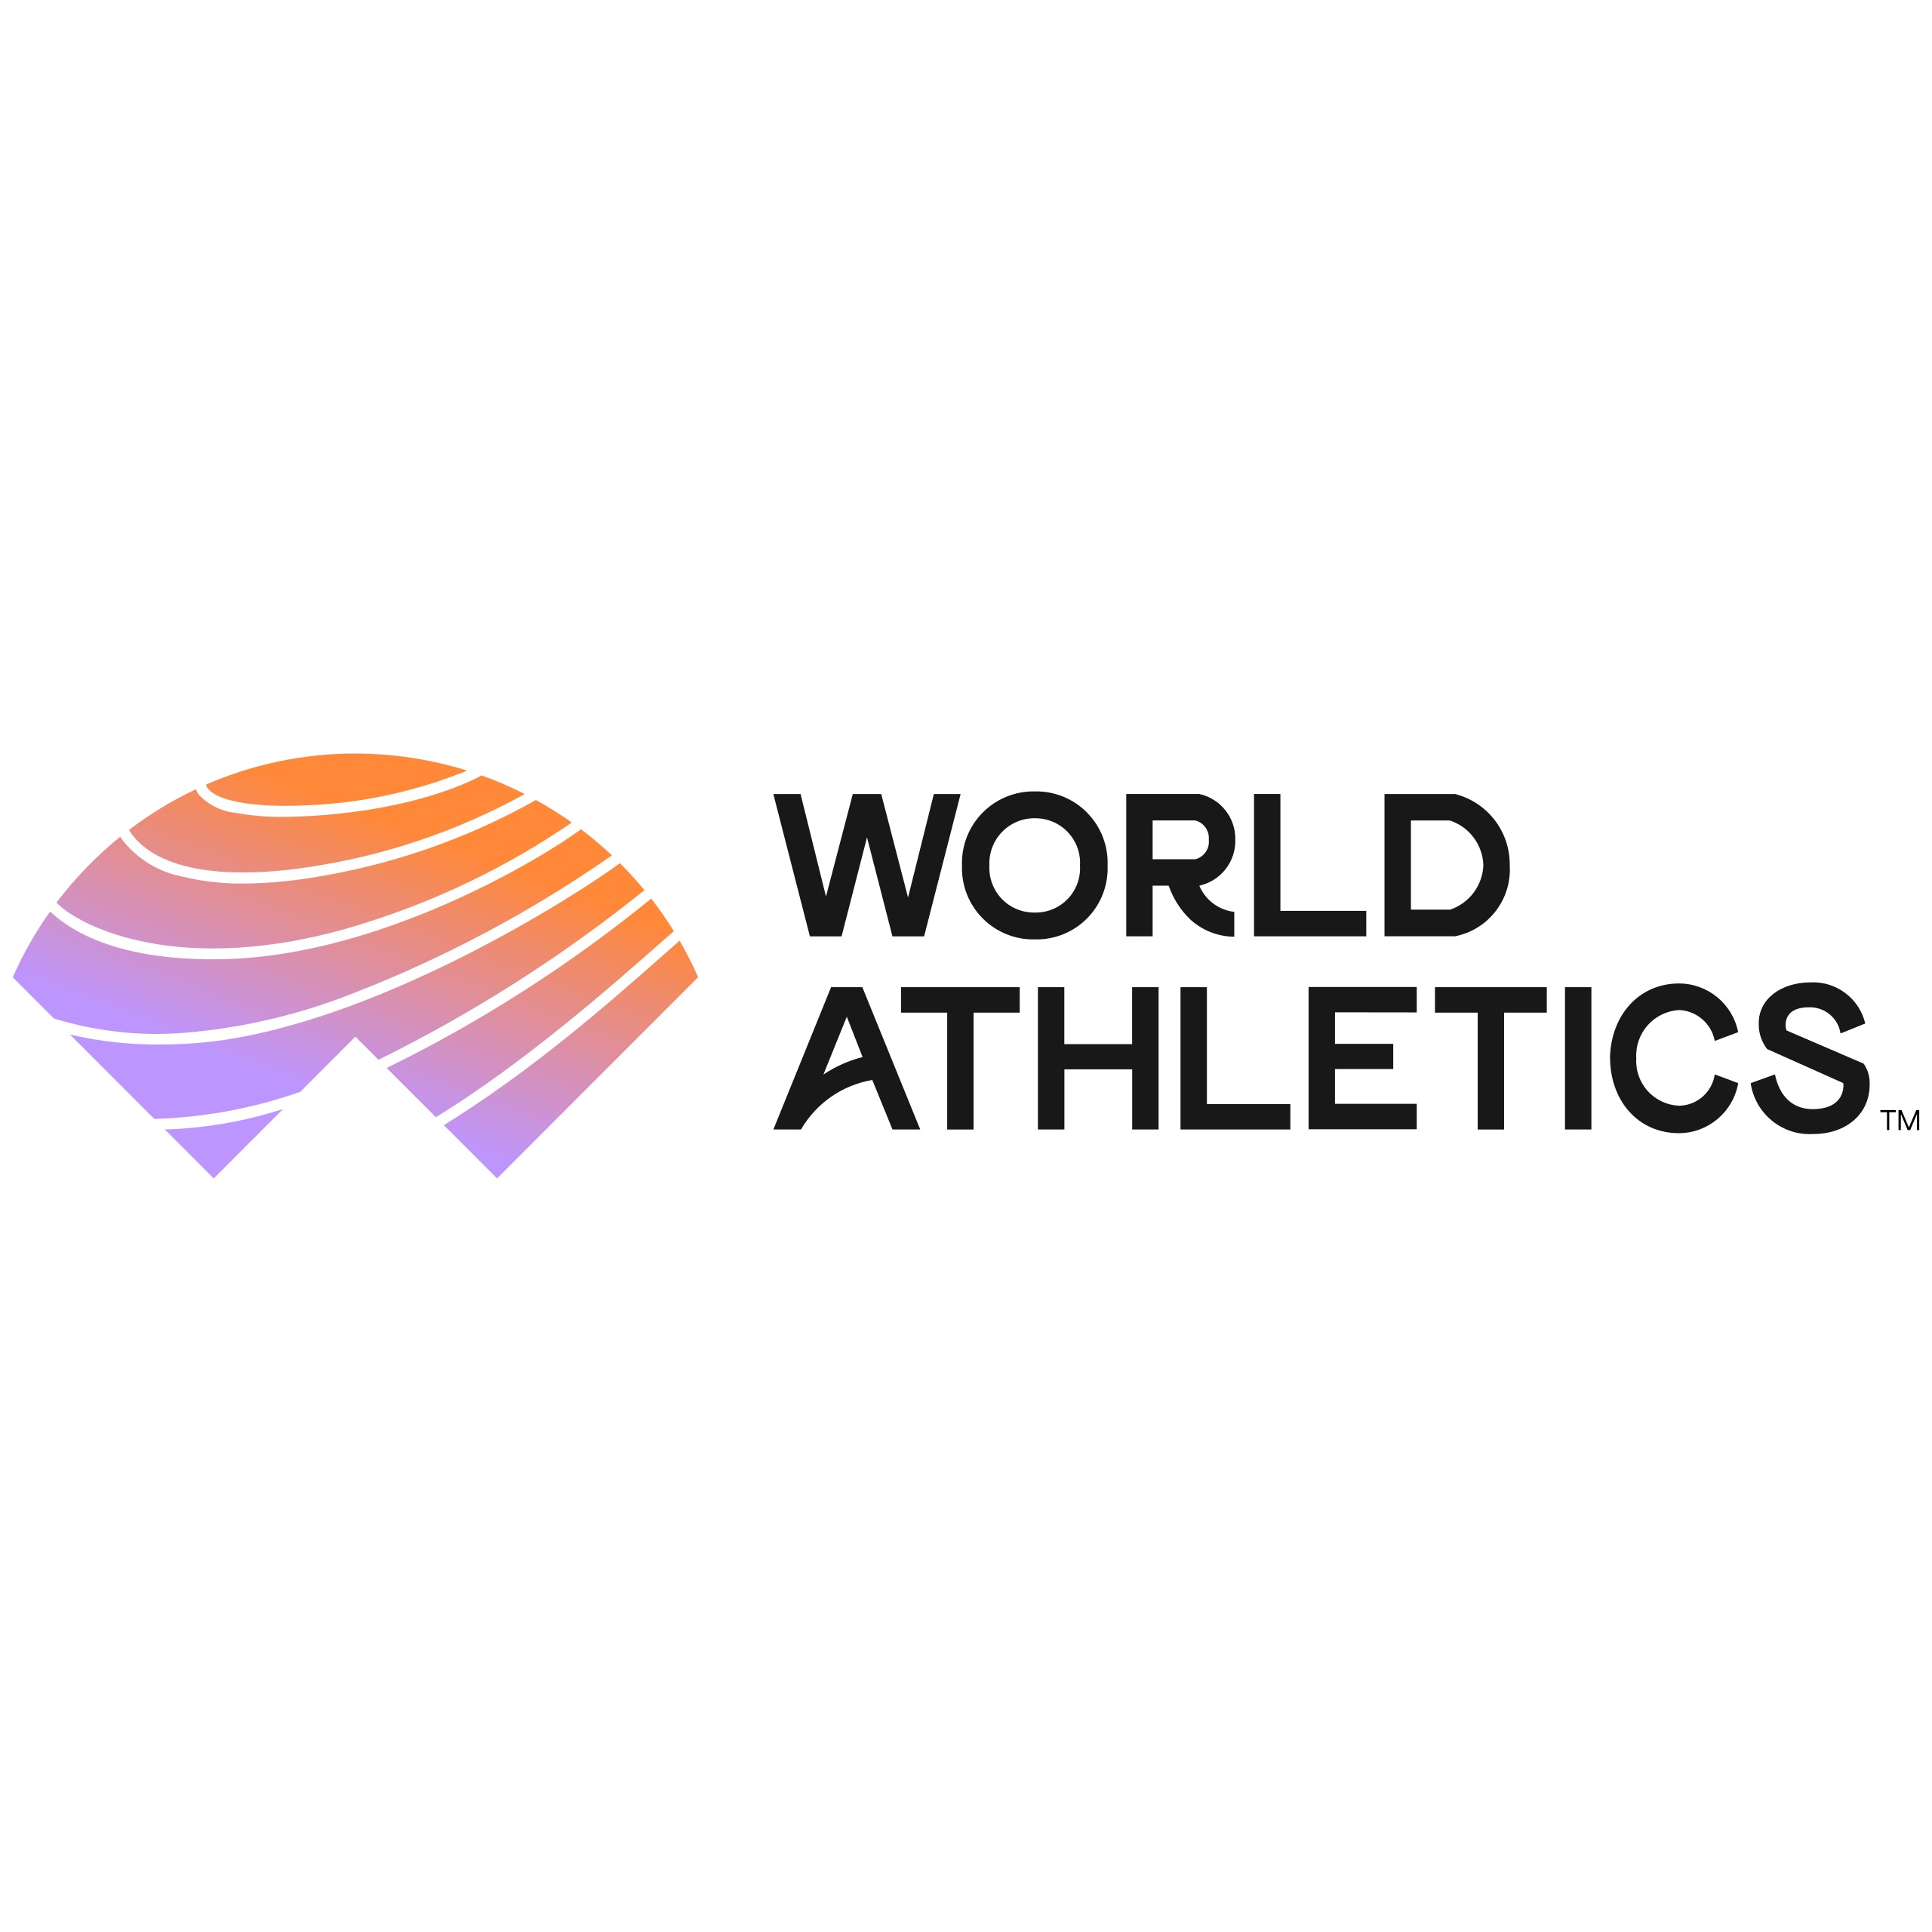 Watch on World Athletics